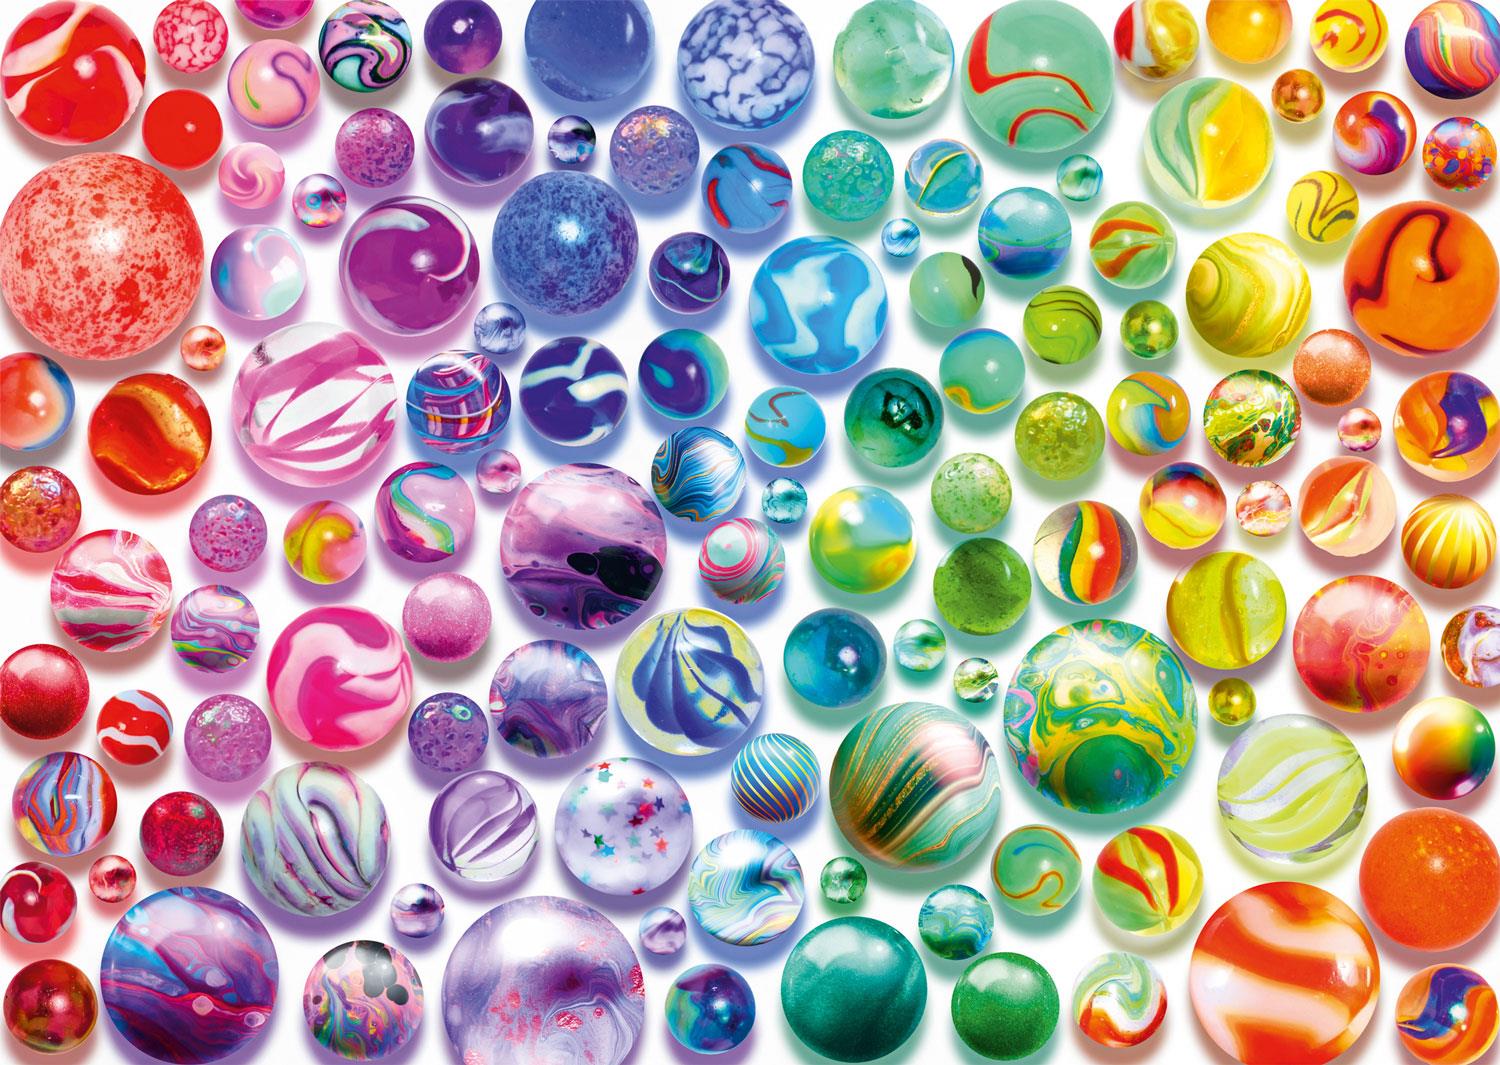 Schmidt Rainbow Marbles Jigsaw Puzzle (1000 Pieces)